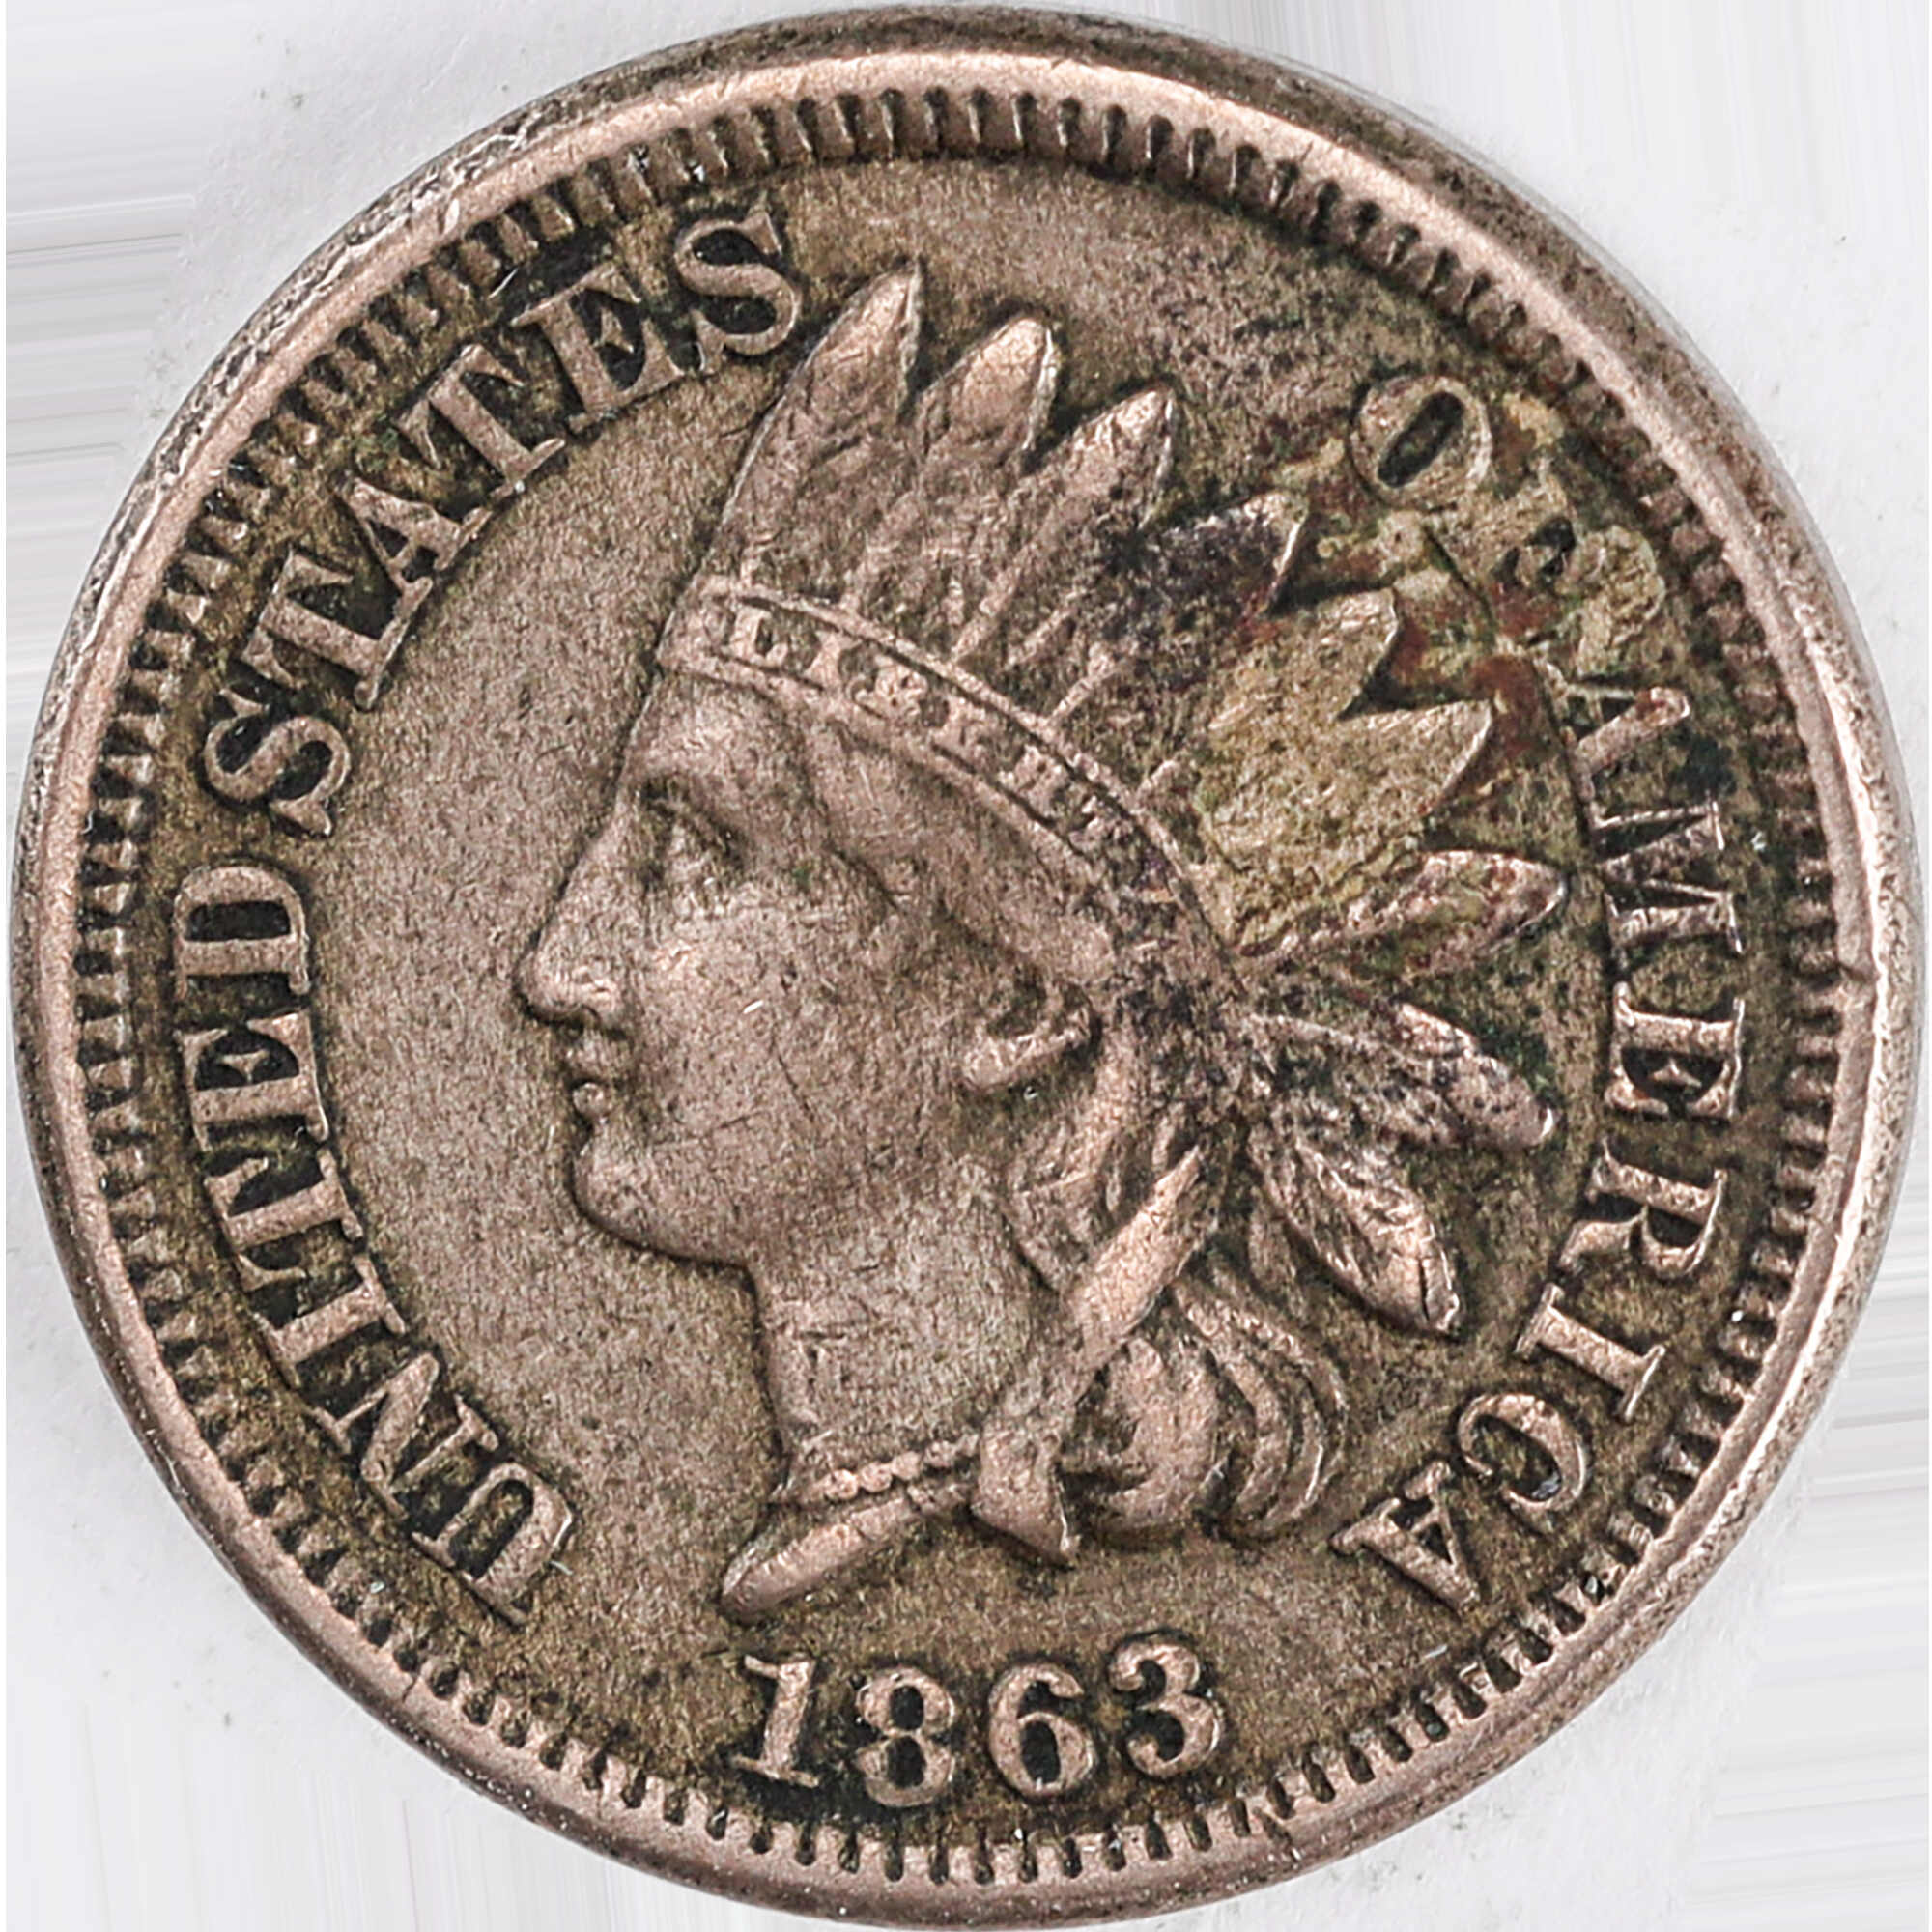 1863 Indian Head Cent VF Very Fine Copper-Nickel Penny SKU:I12407